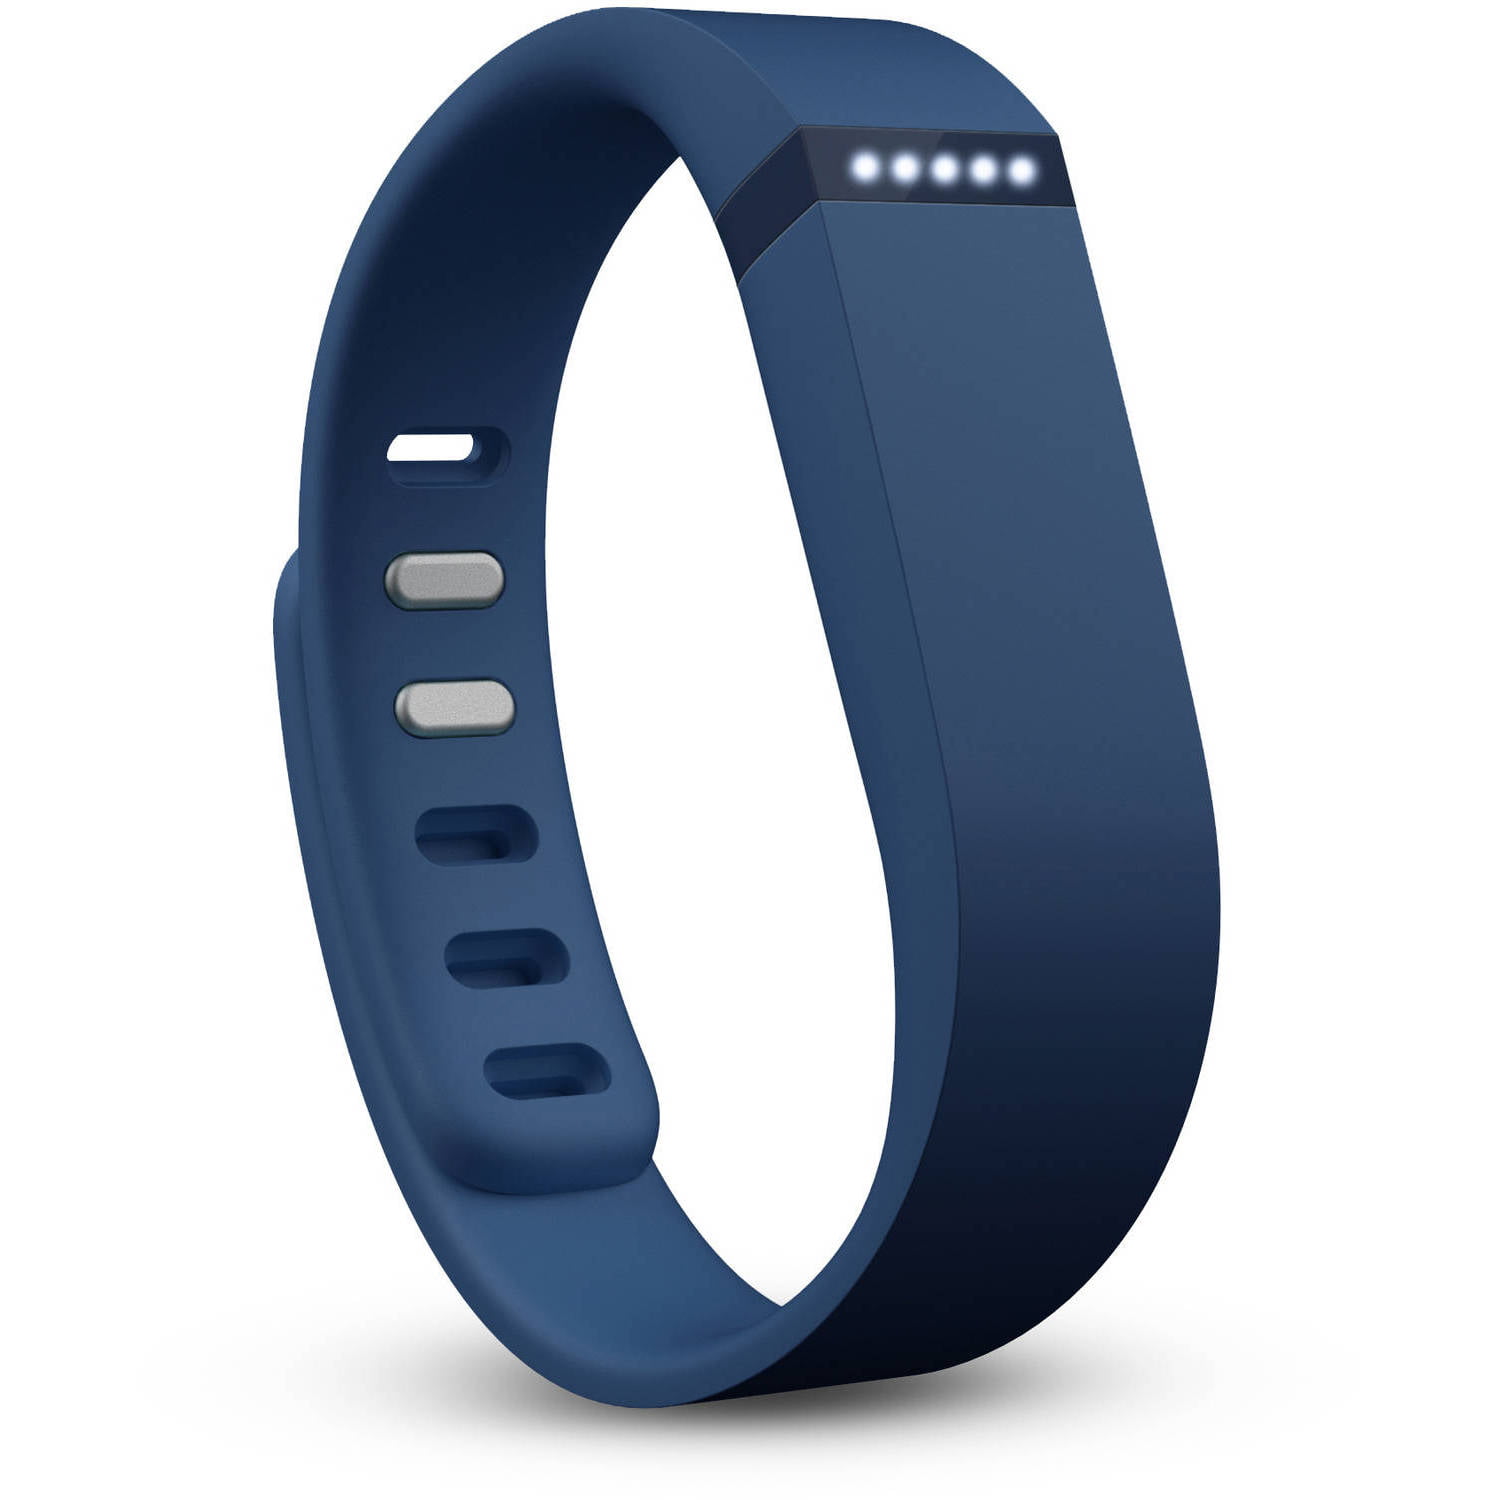 Fitbit Flex Wireless Activity and Fitness Tracker + Sleep Wristband ...